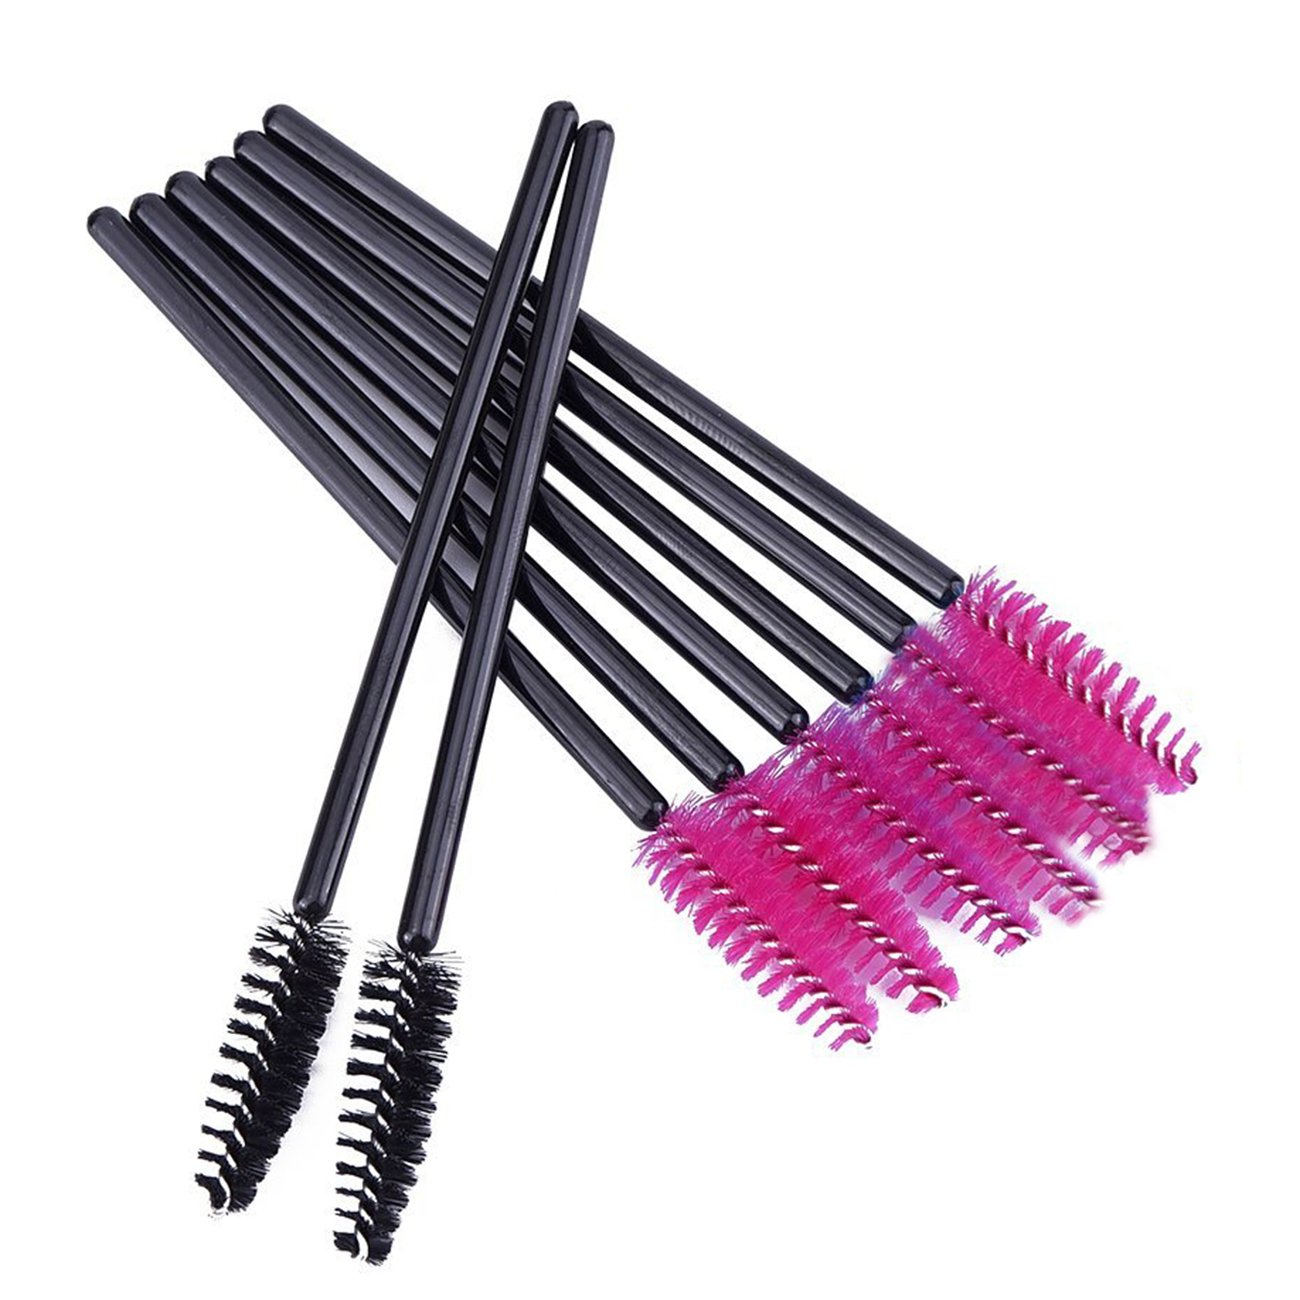 200 PCS Disposable Crystal Eyelash Mascara Brushes Wands (Black and Rose)